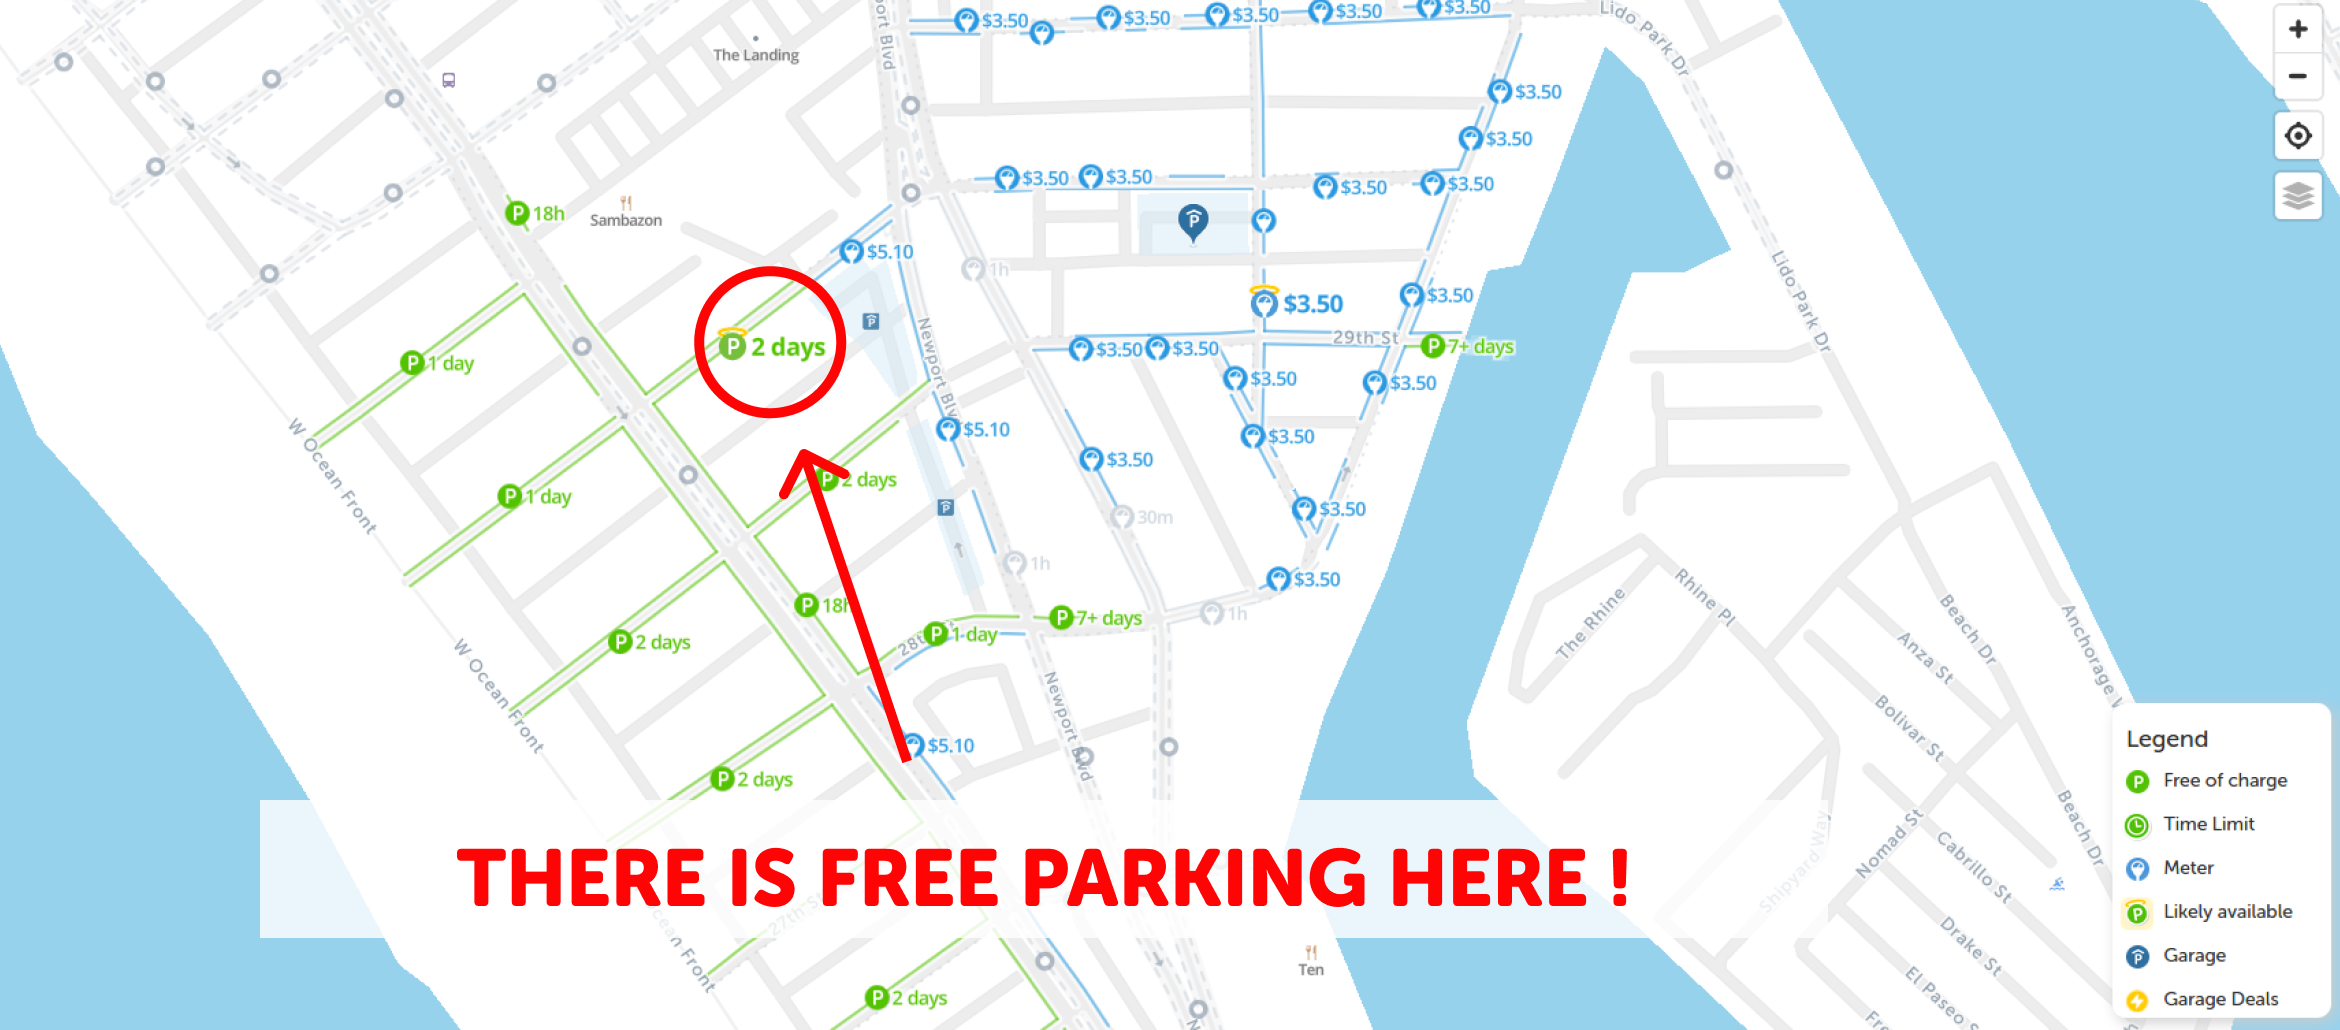 map of free parking in Newport Beach - SpotAngels